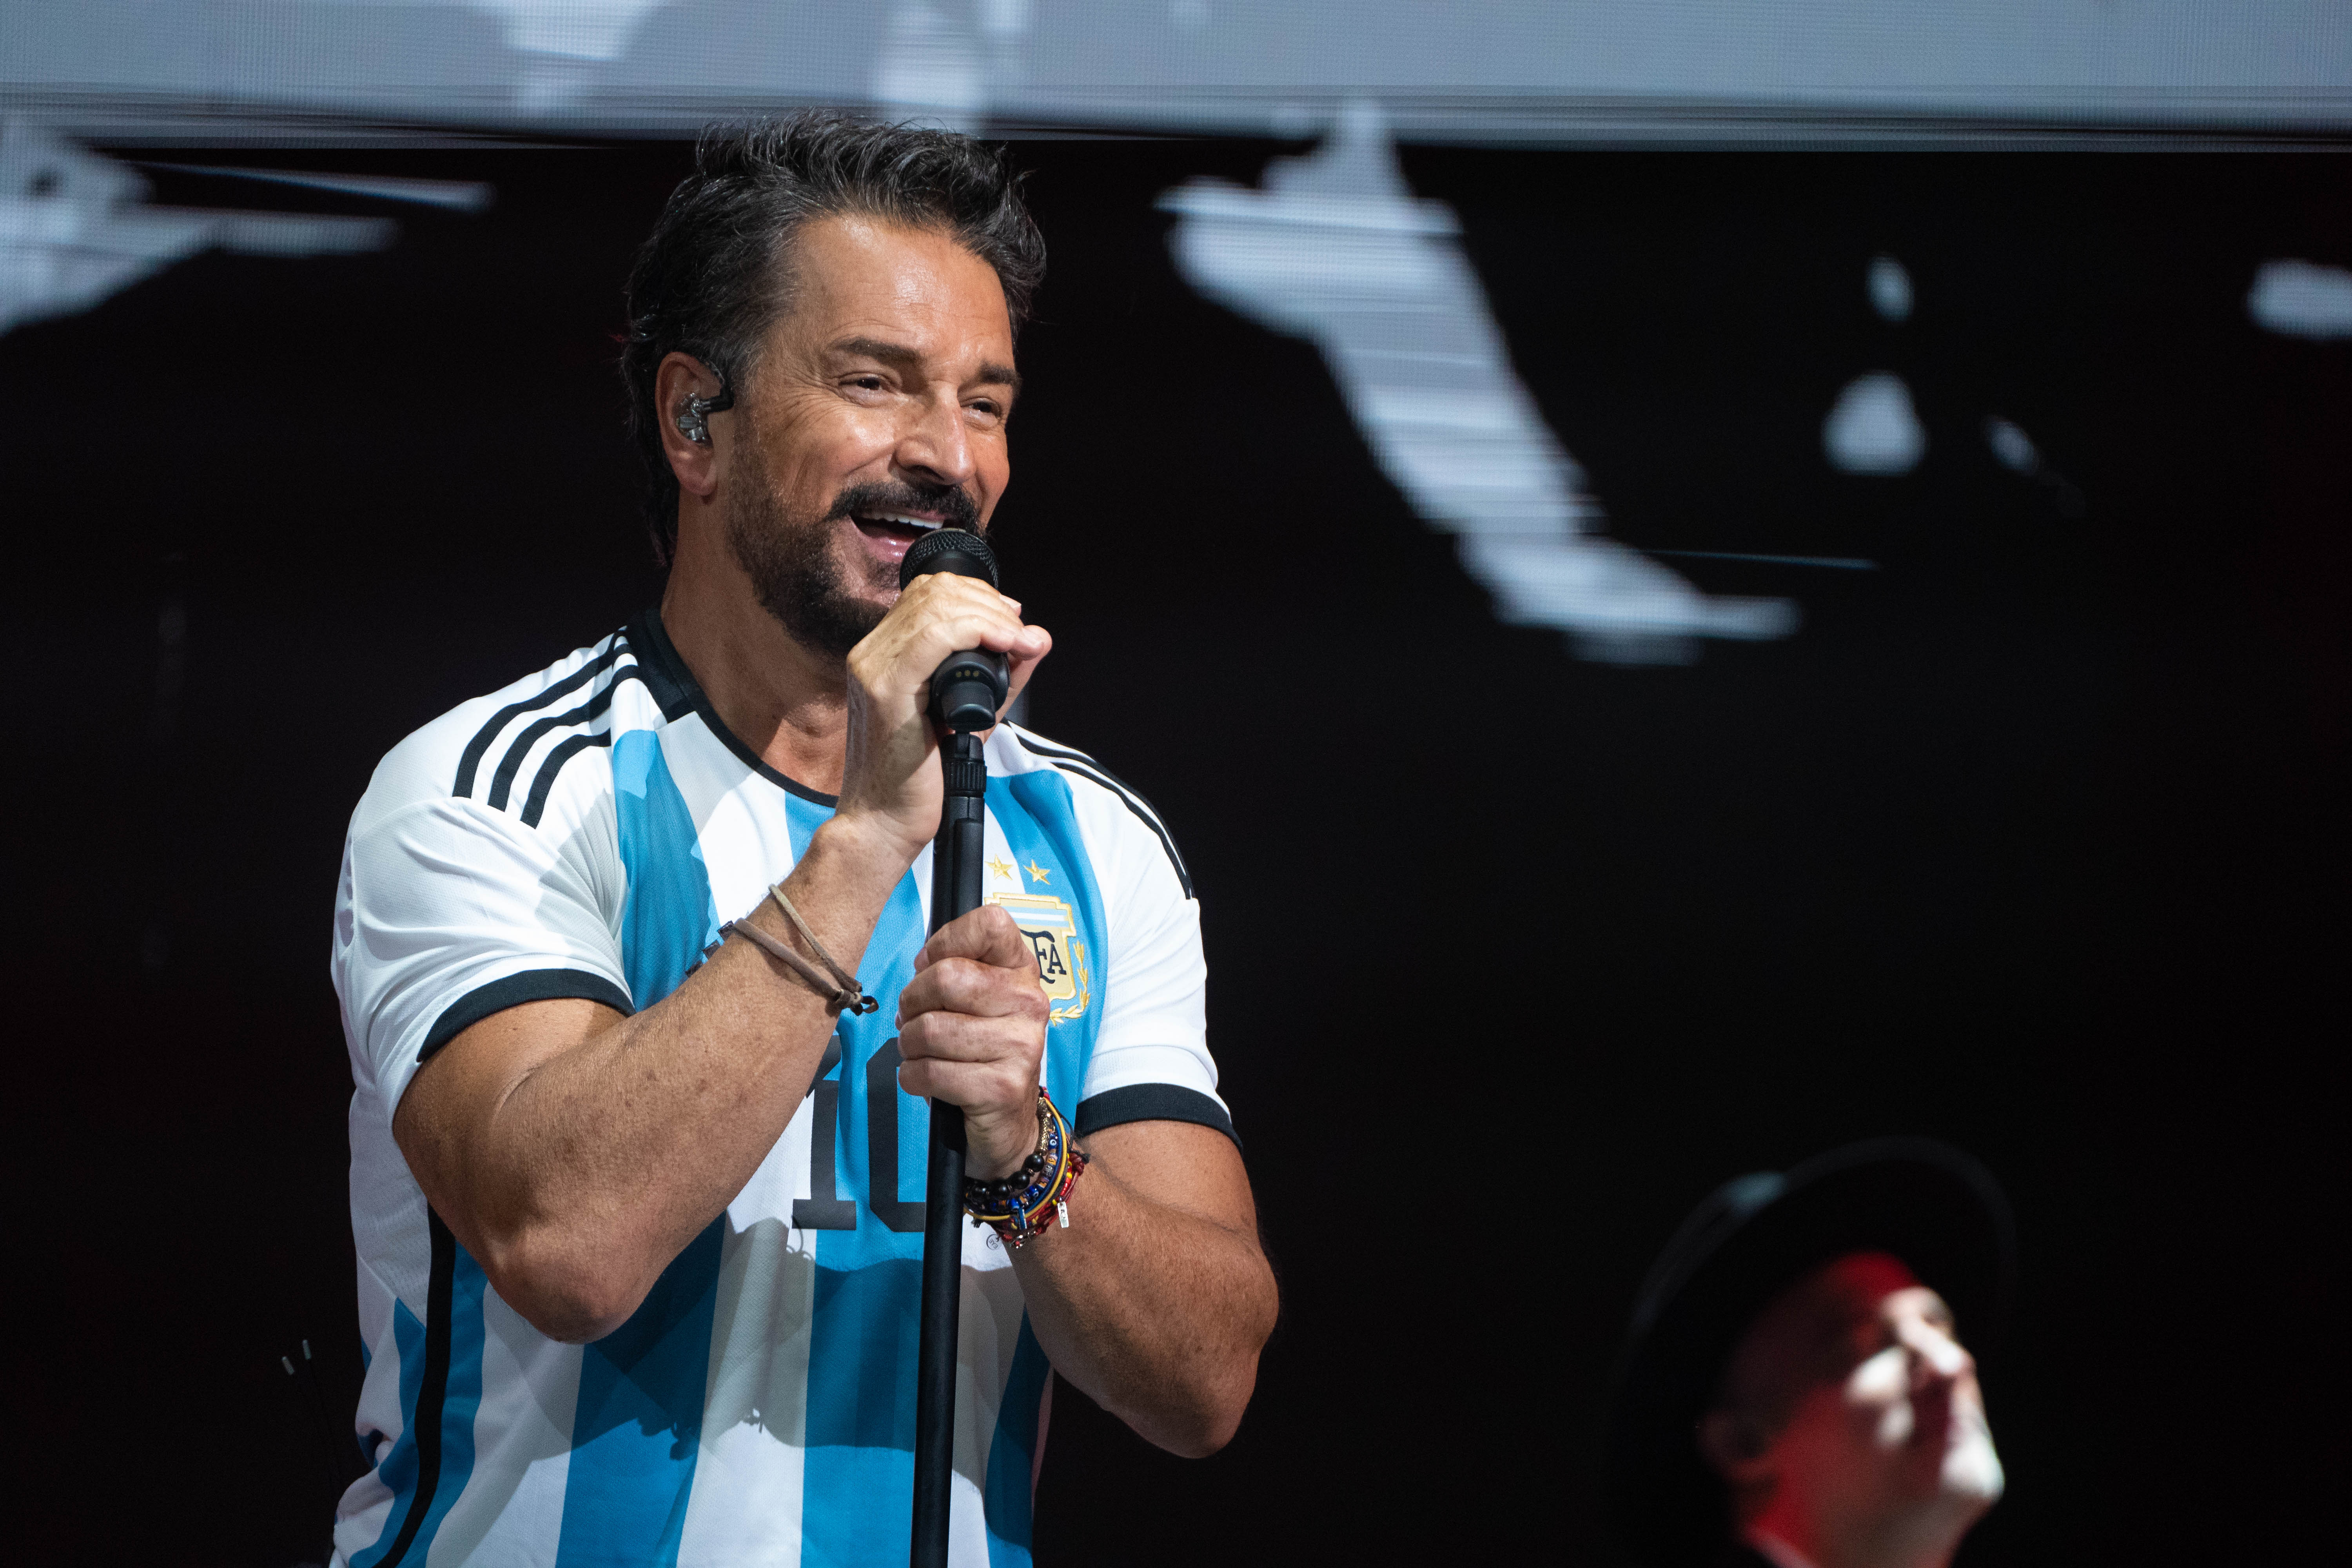 Ricardo Arjona closed his debut show at the Movistar Arena wearing the Argentine team 10 shirt (Photo: Franco Fafsuli)